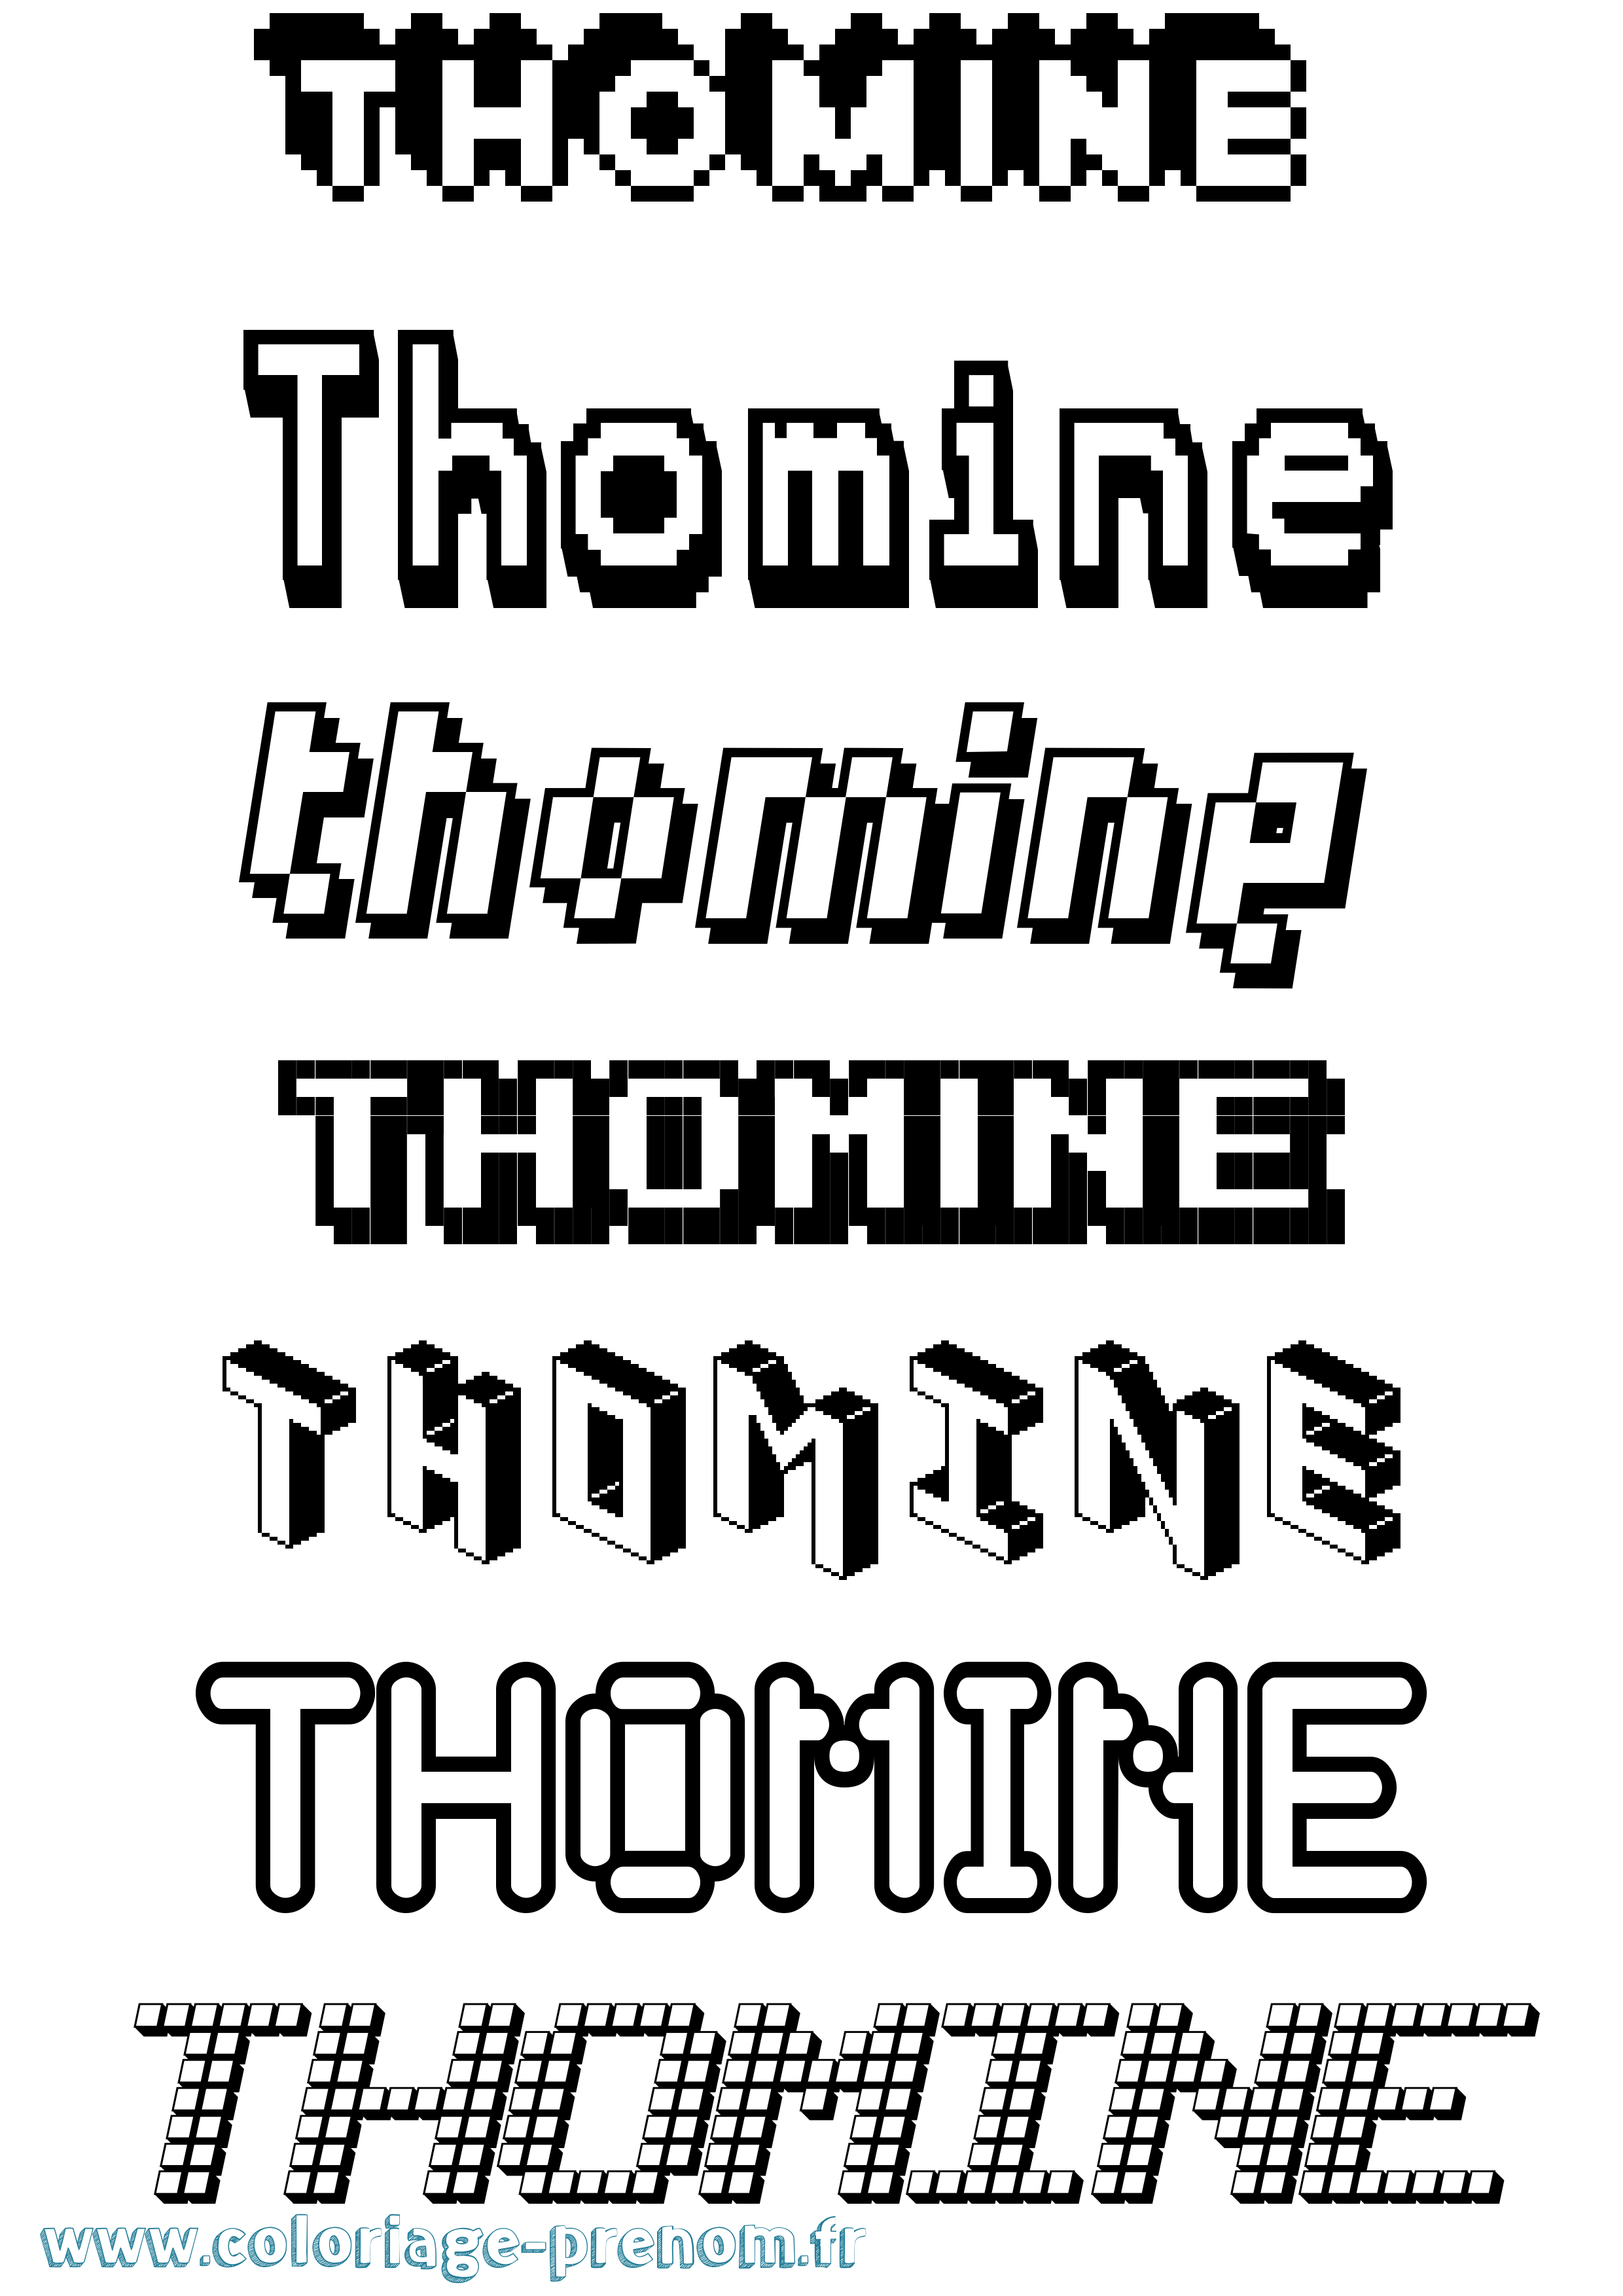 Coloriage prénom Thomine Pixel